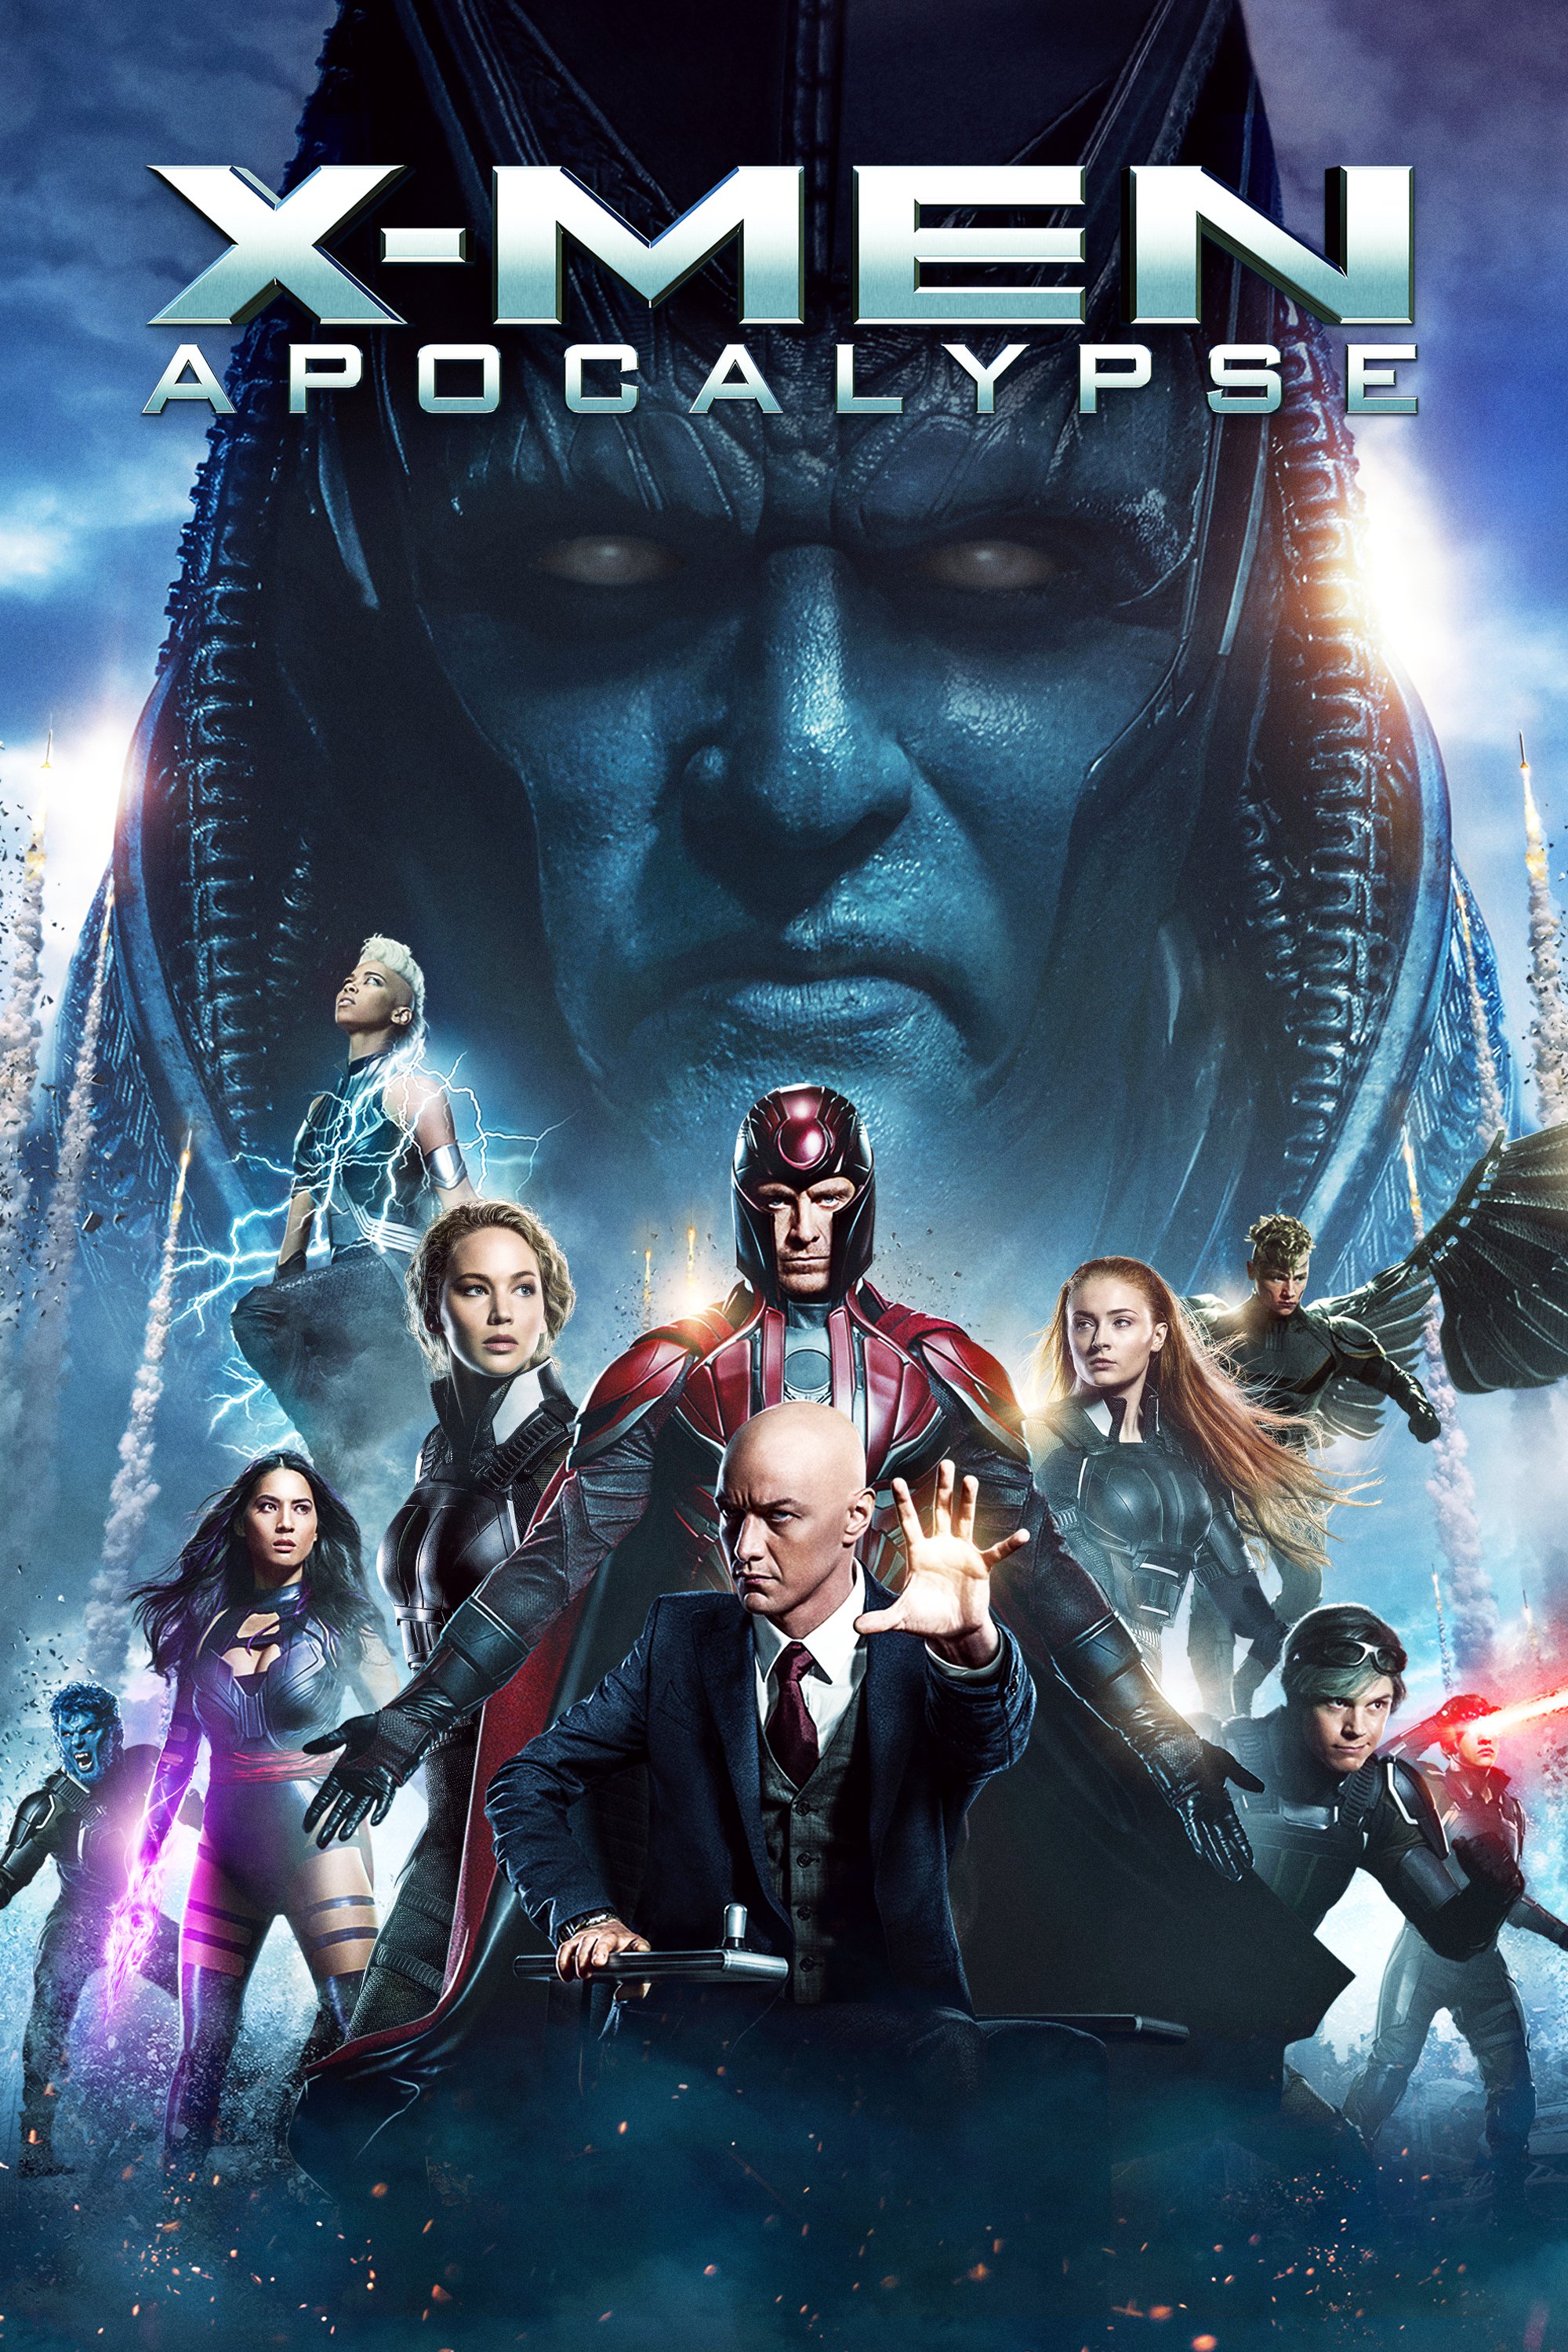 Plakat von "X-Men: Apocalypse"